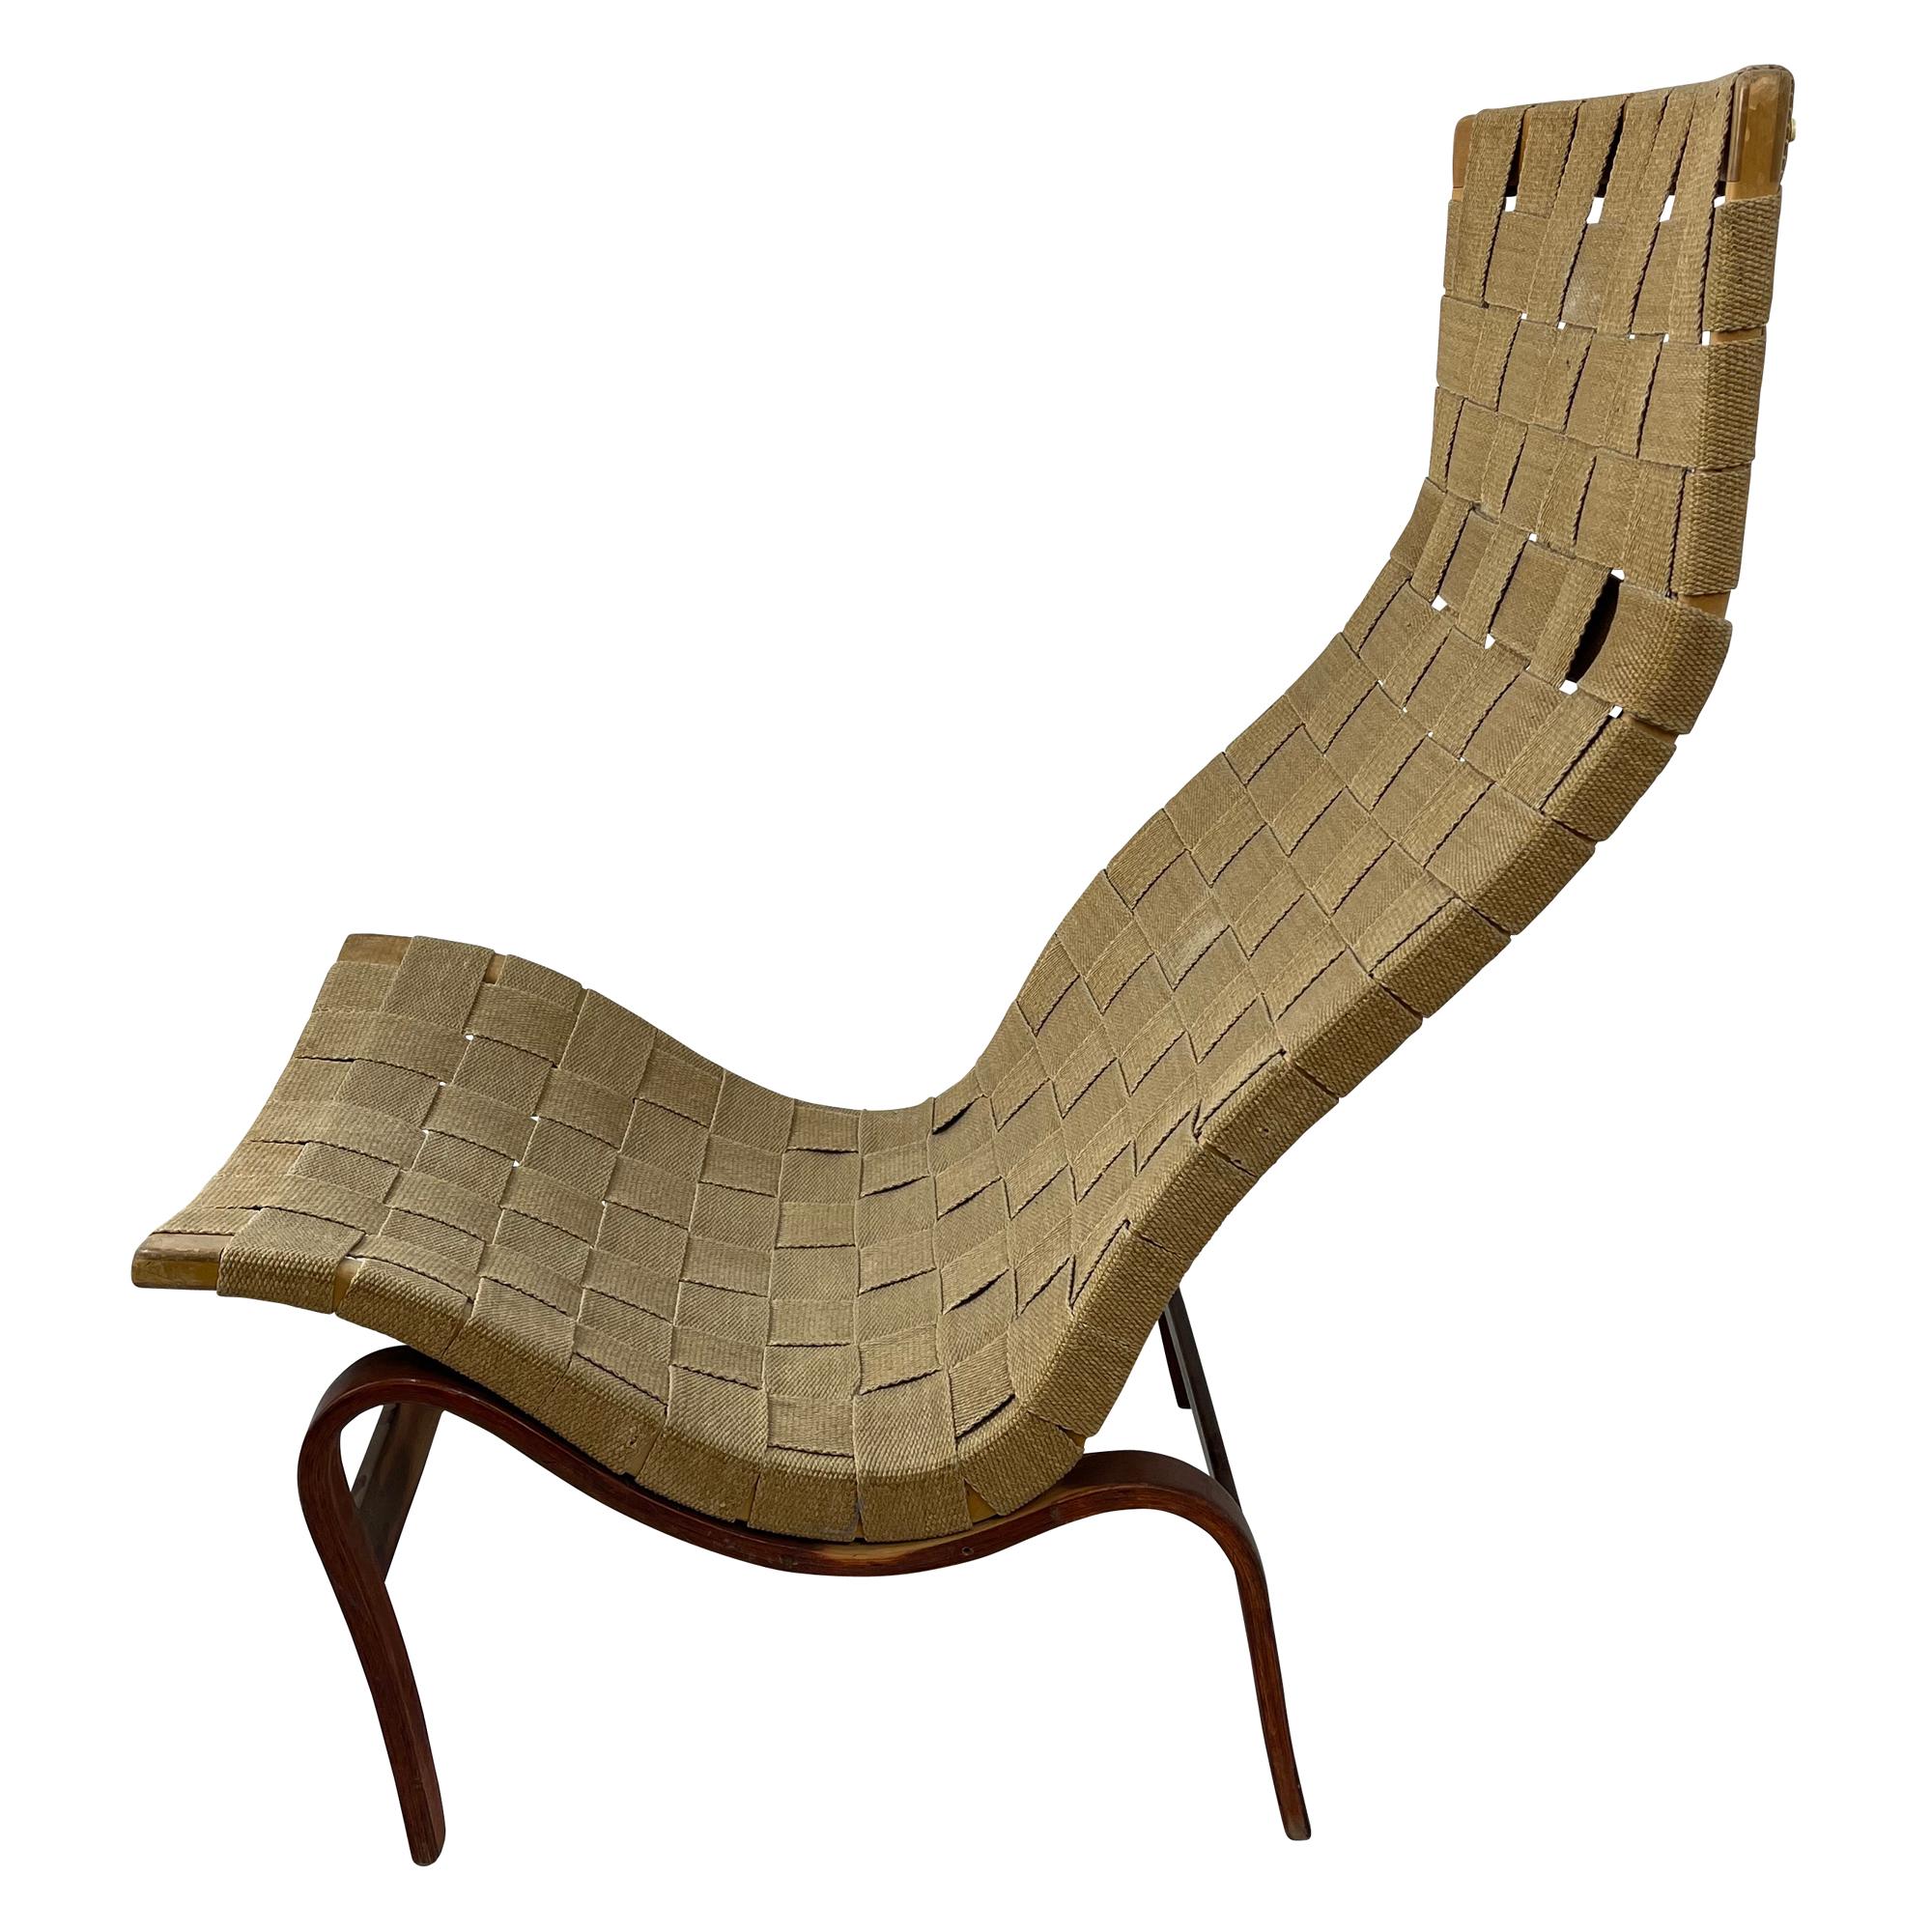 1940's Vintage Eva Chair by Bruno Mattson for Karl Mattson, Sweeden.
Wooden Base with paper cord webbing.